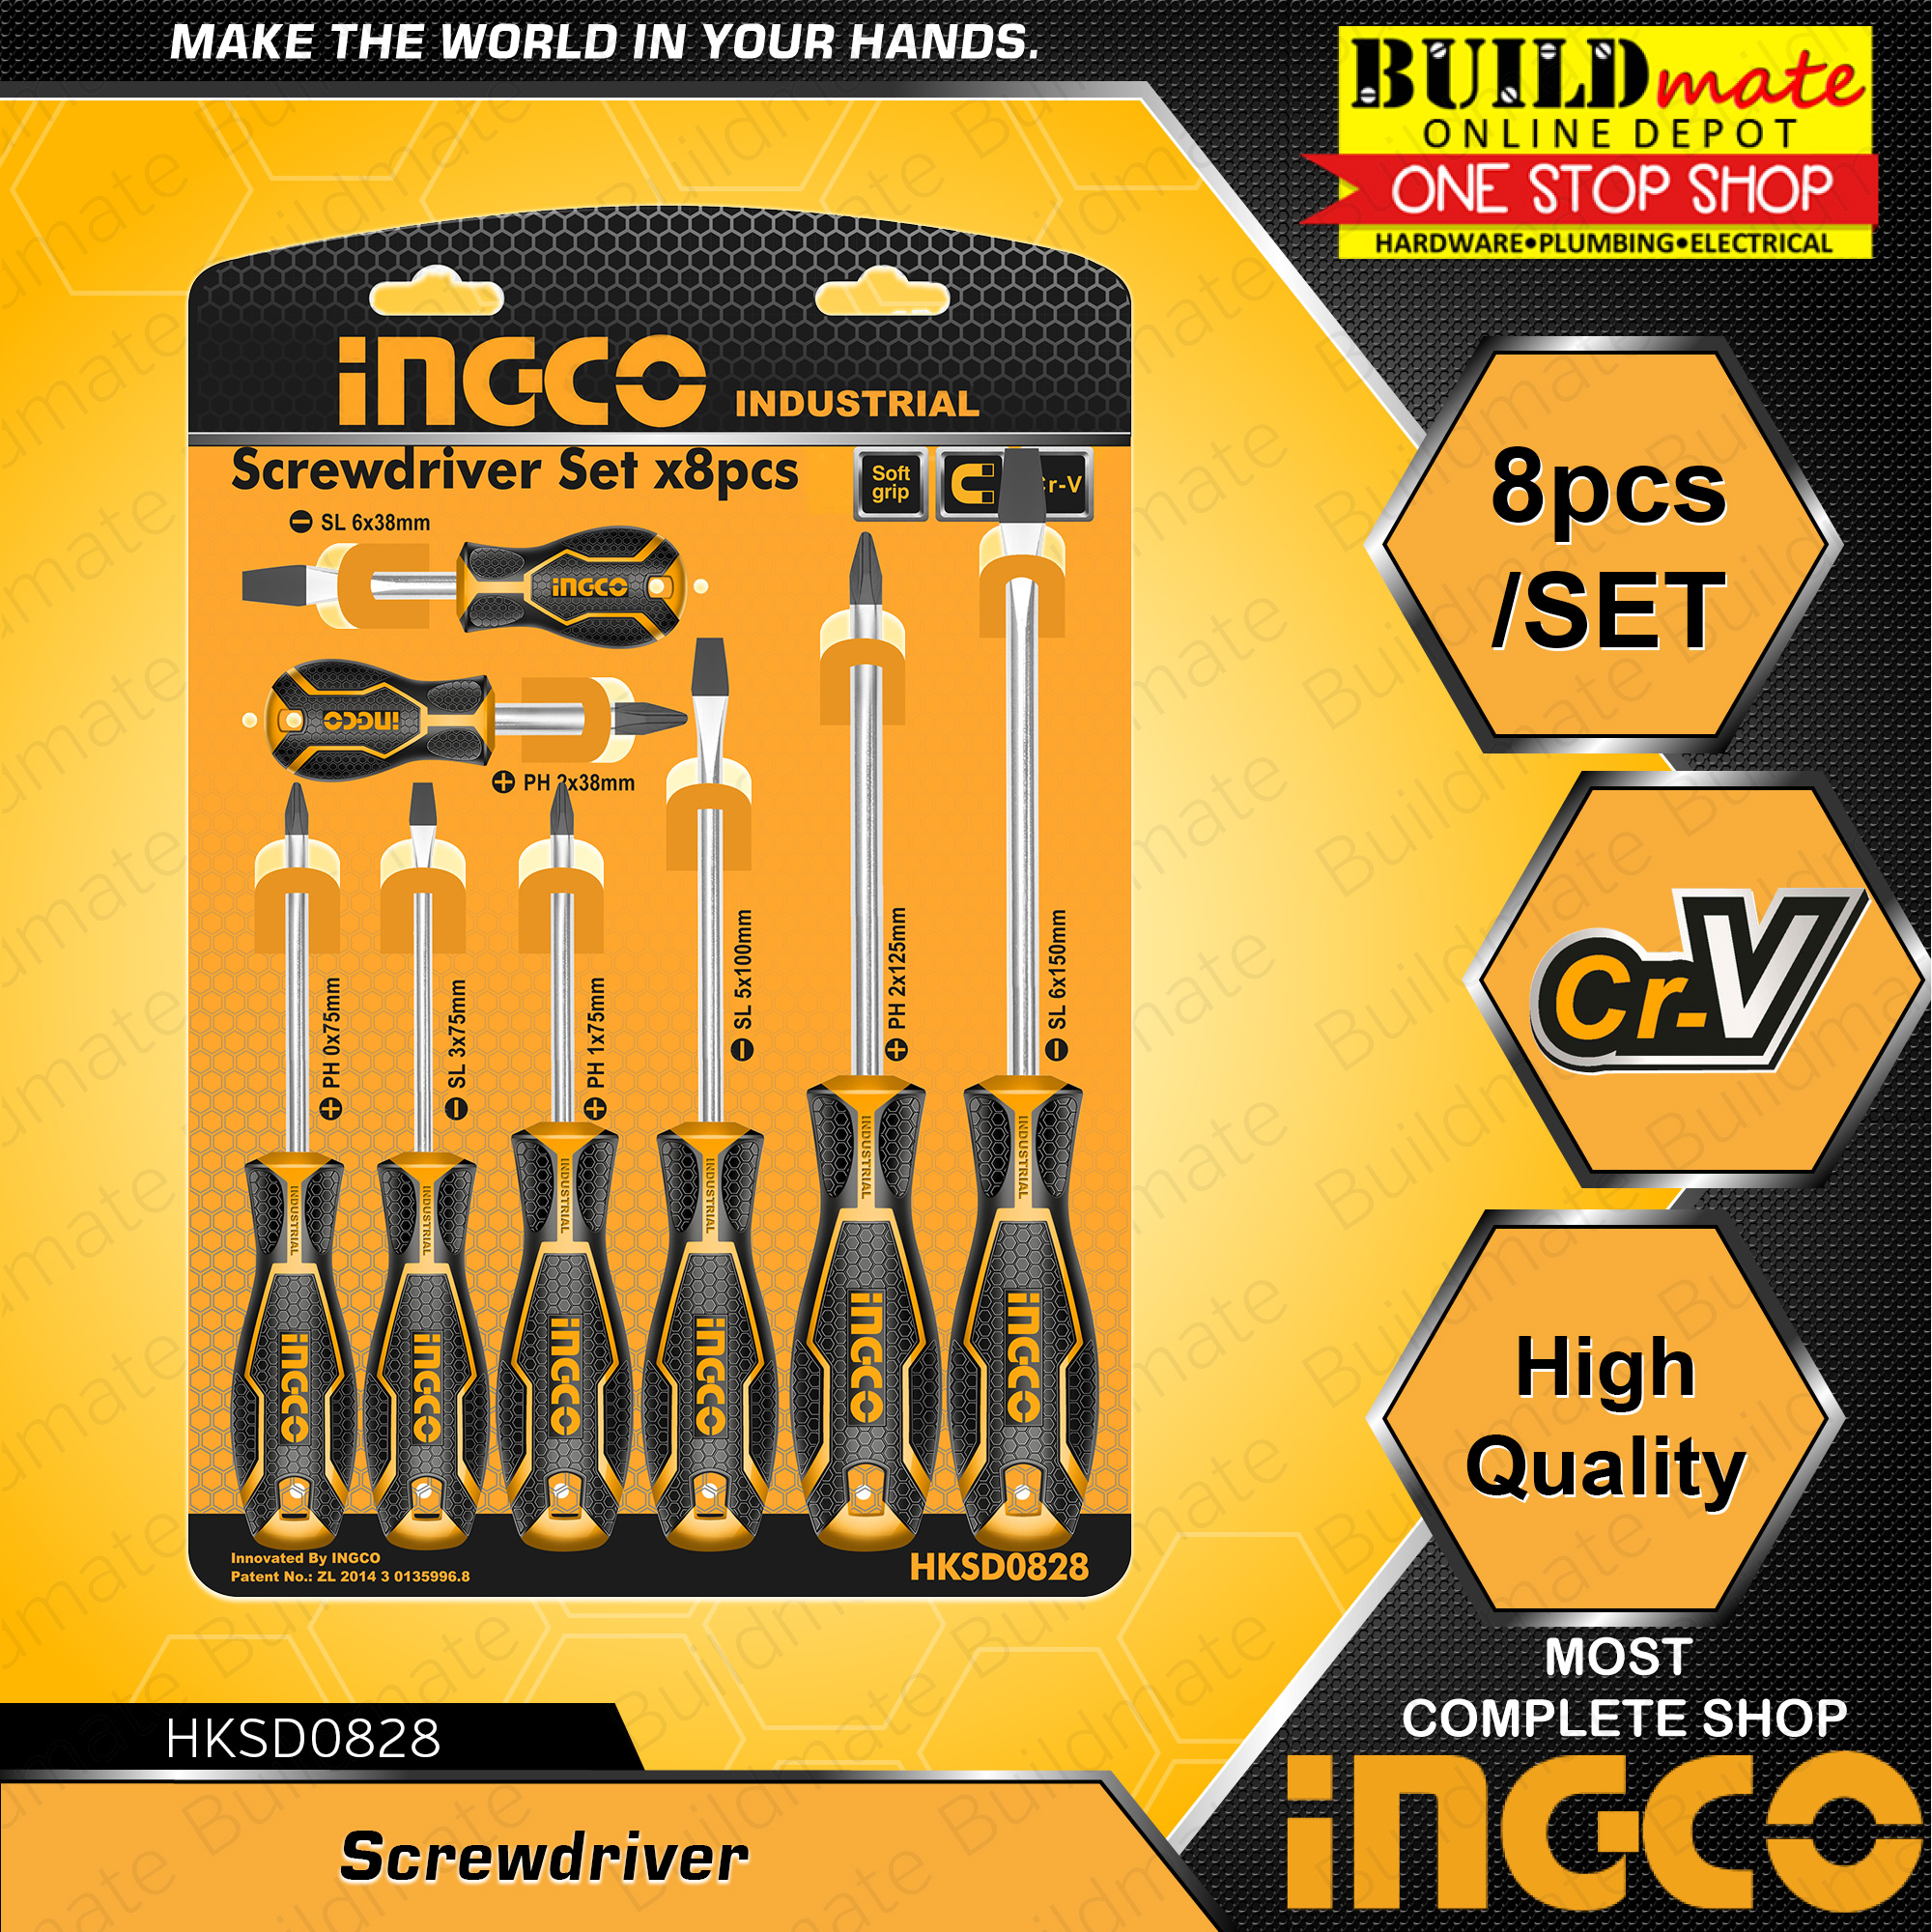 INGCO Screwdriver 8PCS/SET HKSD0828 | Lazada PH